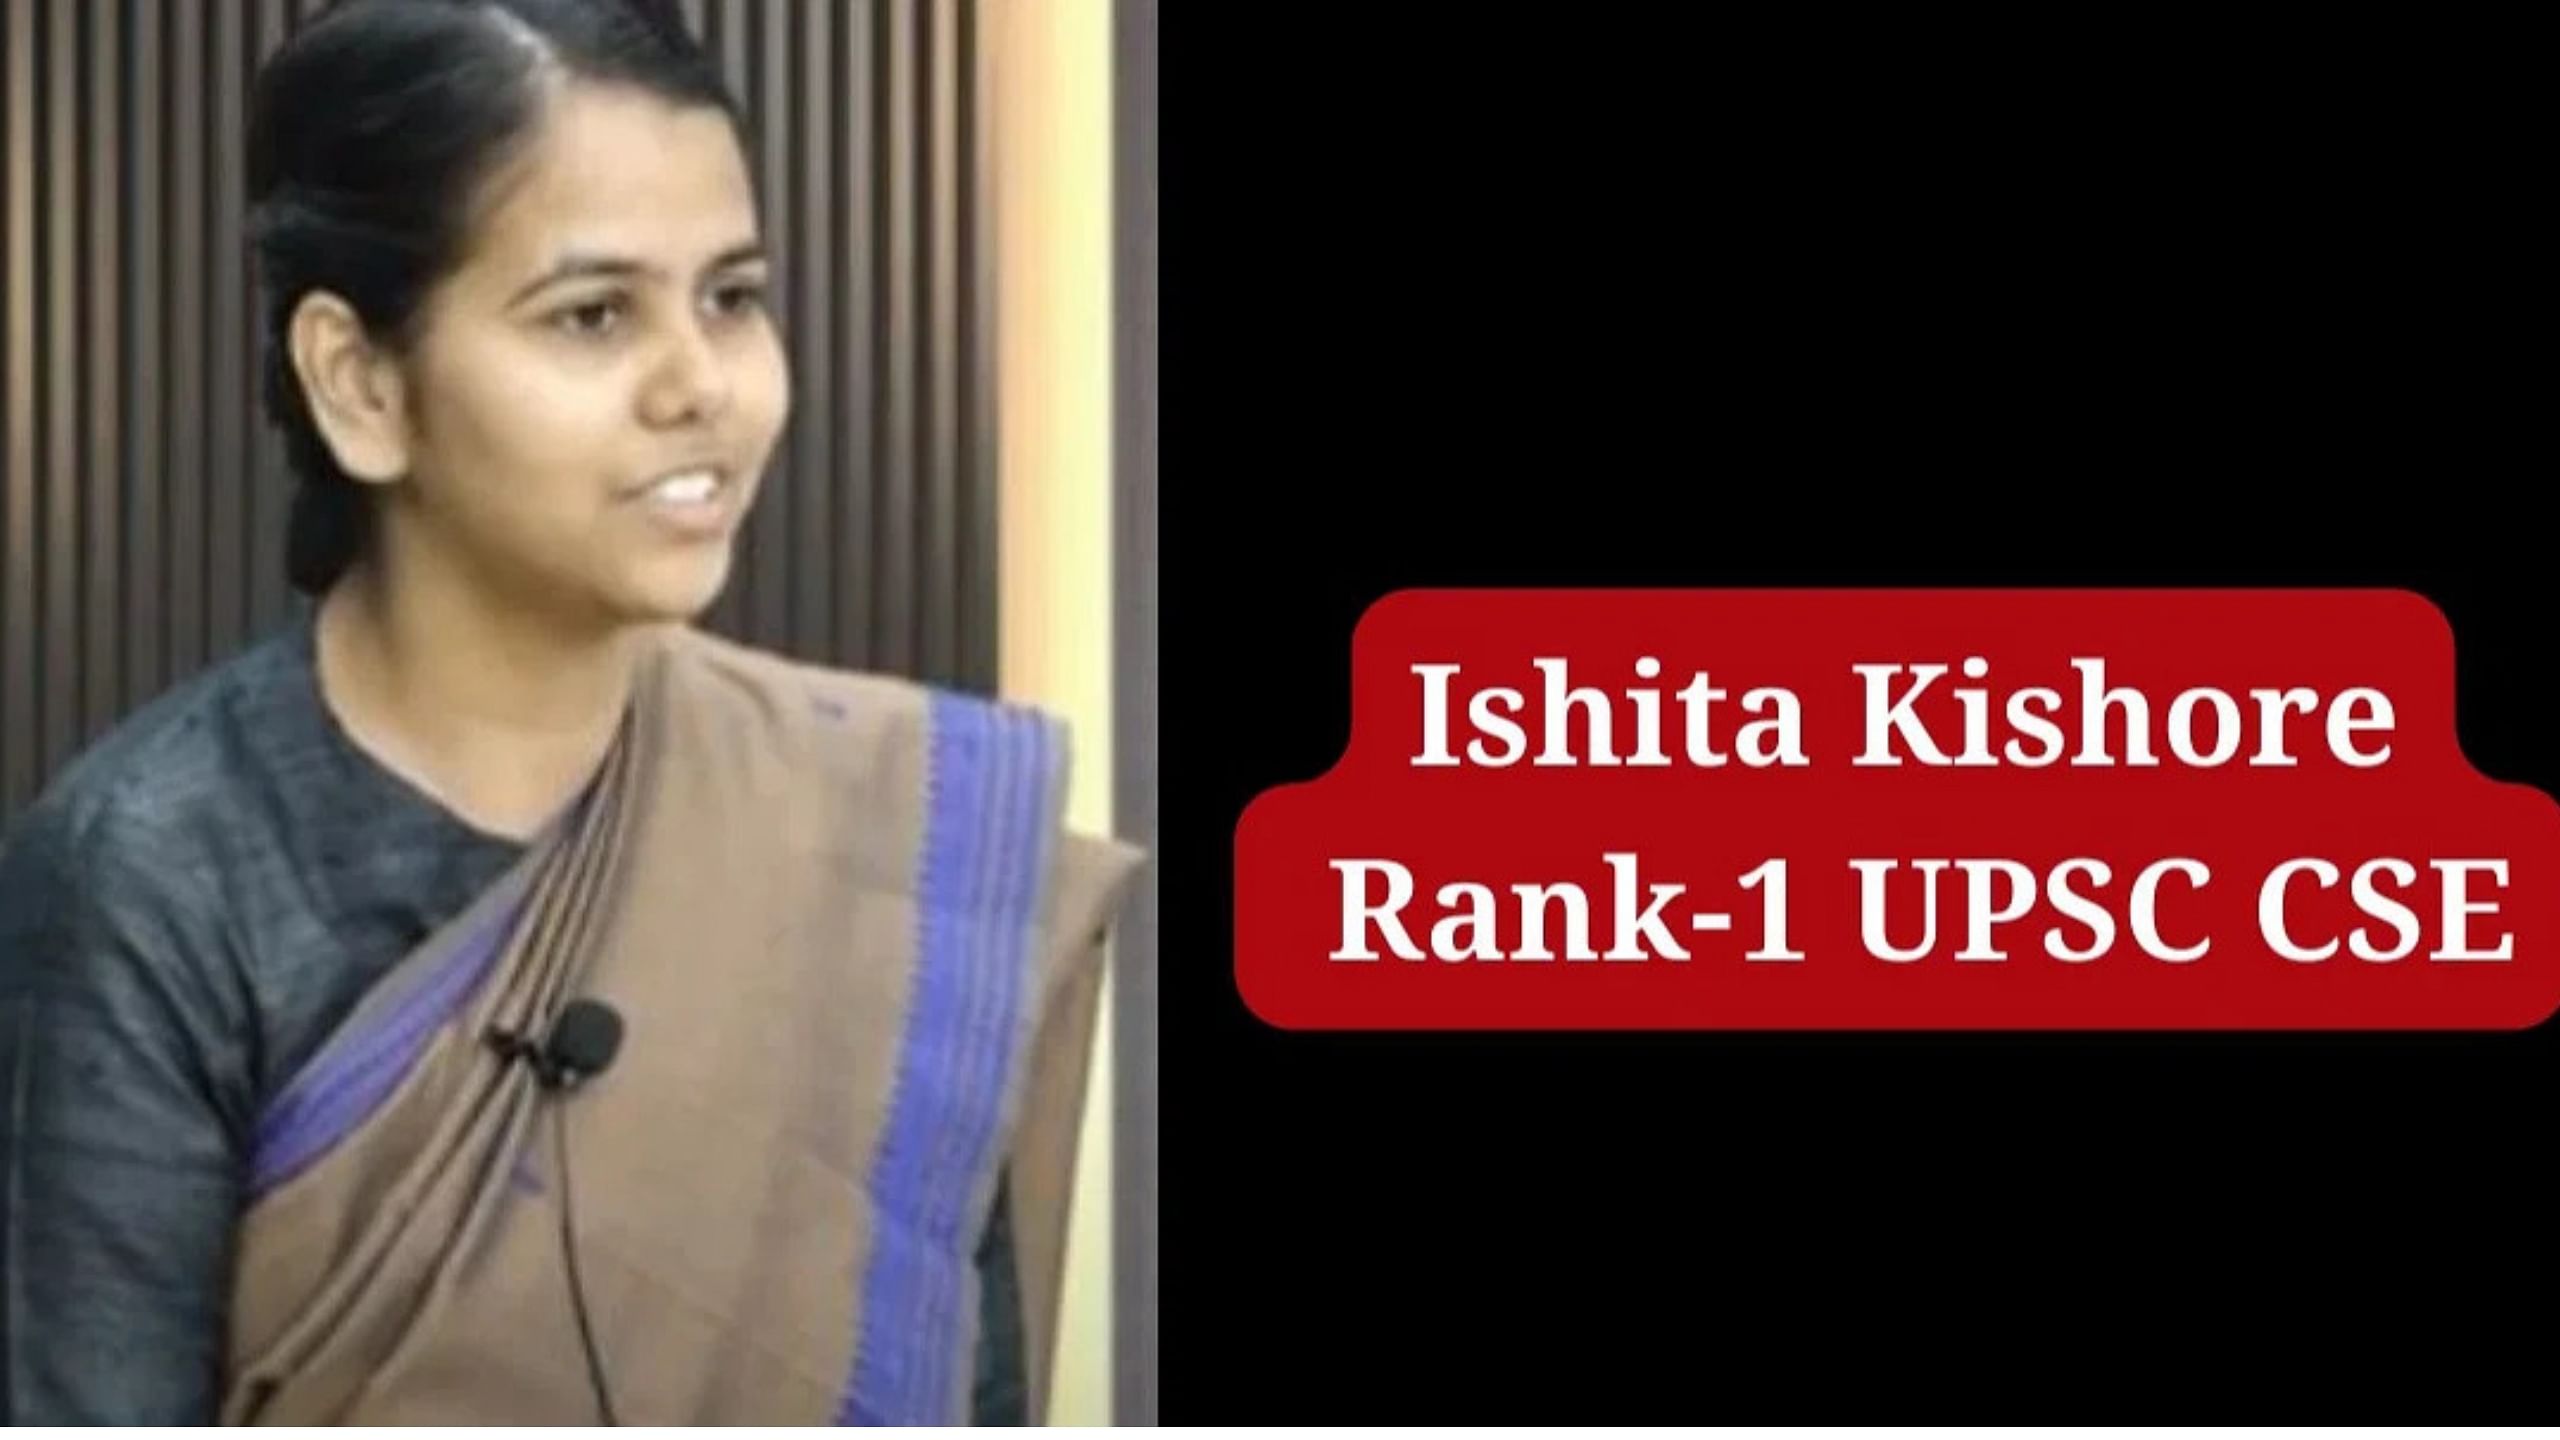 Delhi University Graduate Ishita Kishore Tops UPSC Civil Services Exam 2022 with All India Rank 1